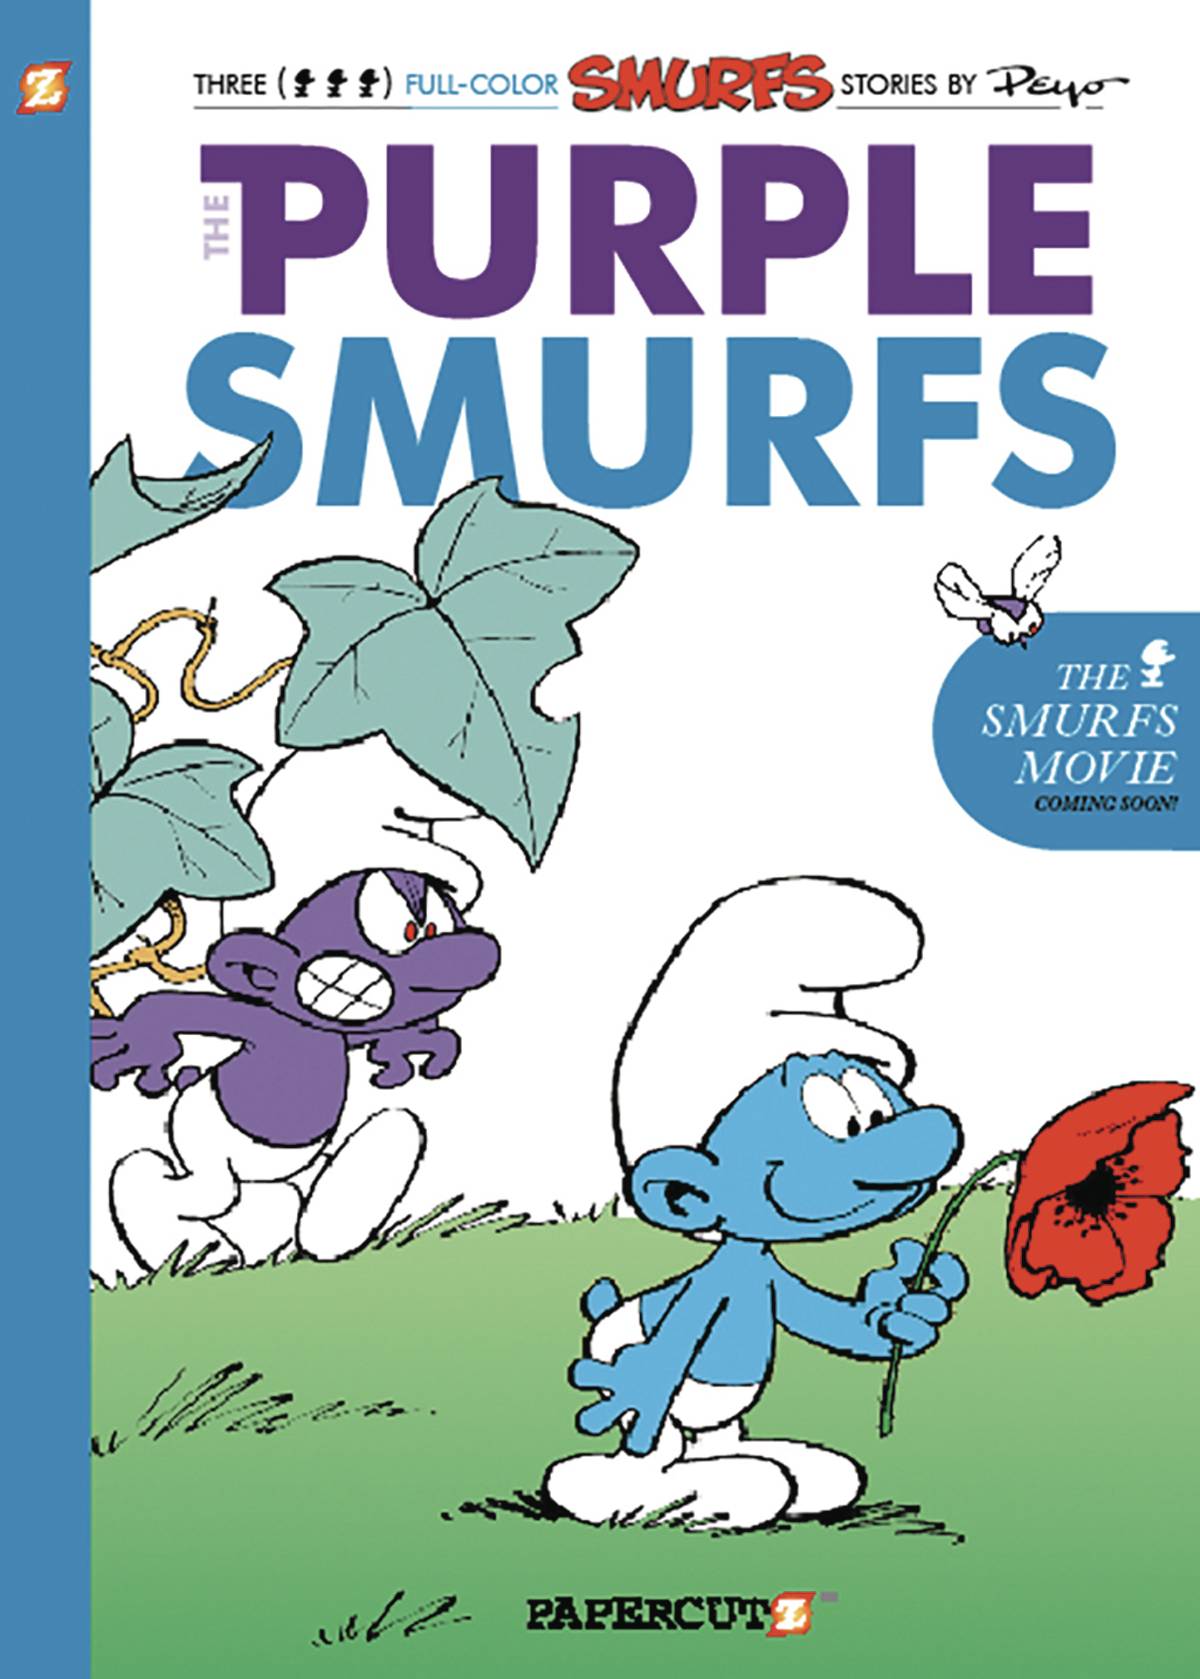 My First Smurfs Graphic Novel Volume 1